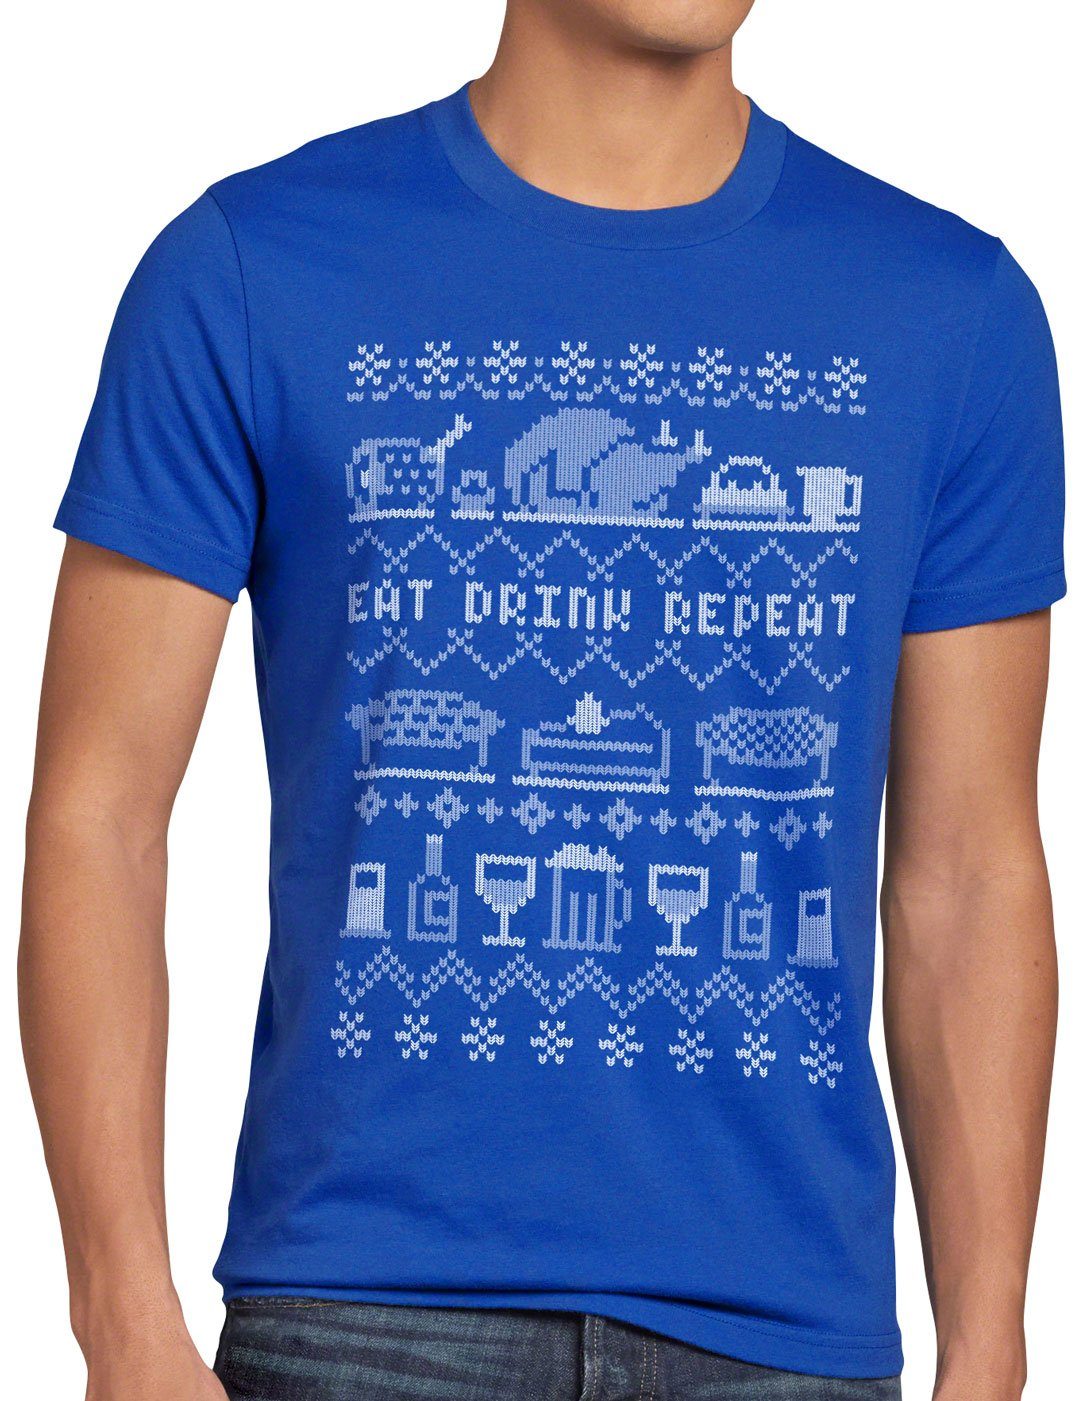 blau Sweater Eat fressen Ugly pulli Print-Shirt x-mas Herren feiertage weihnachtsessen Repeat Drink T-Shirt style3